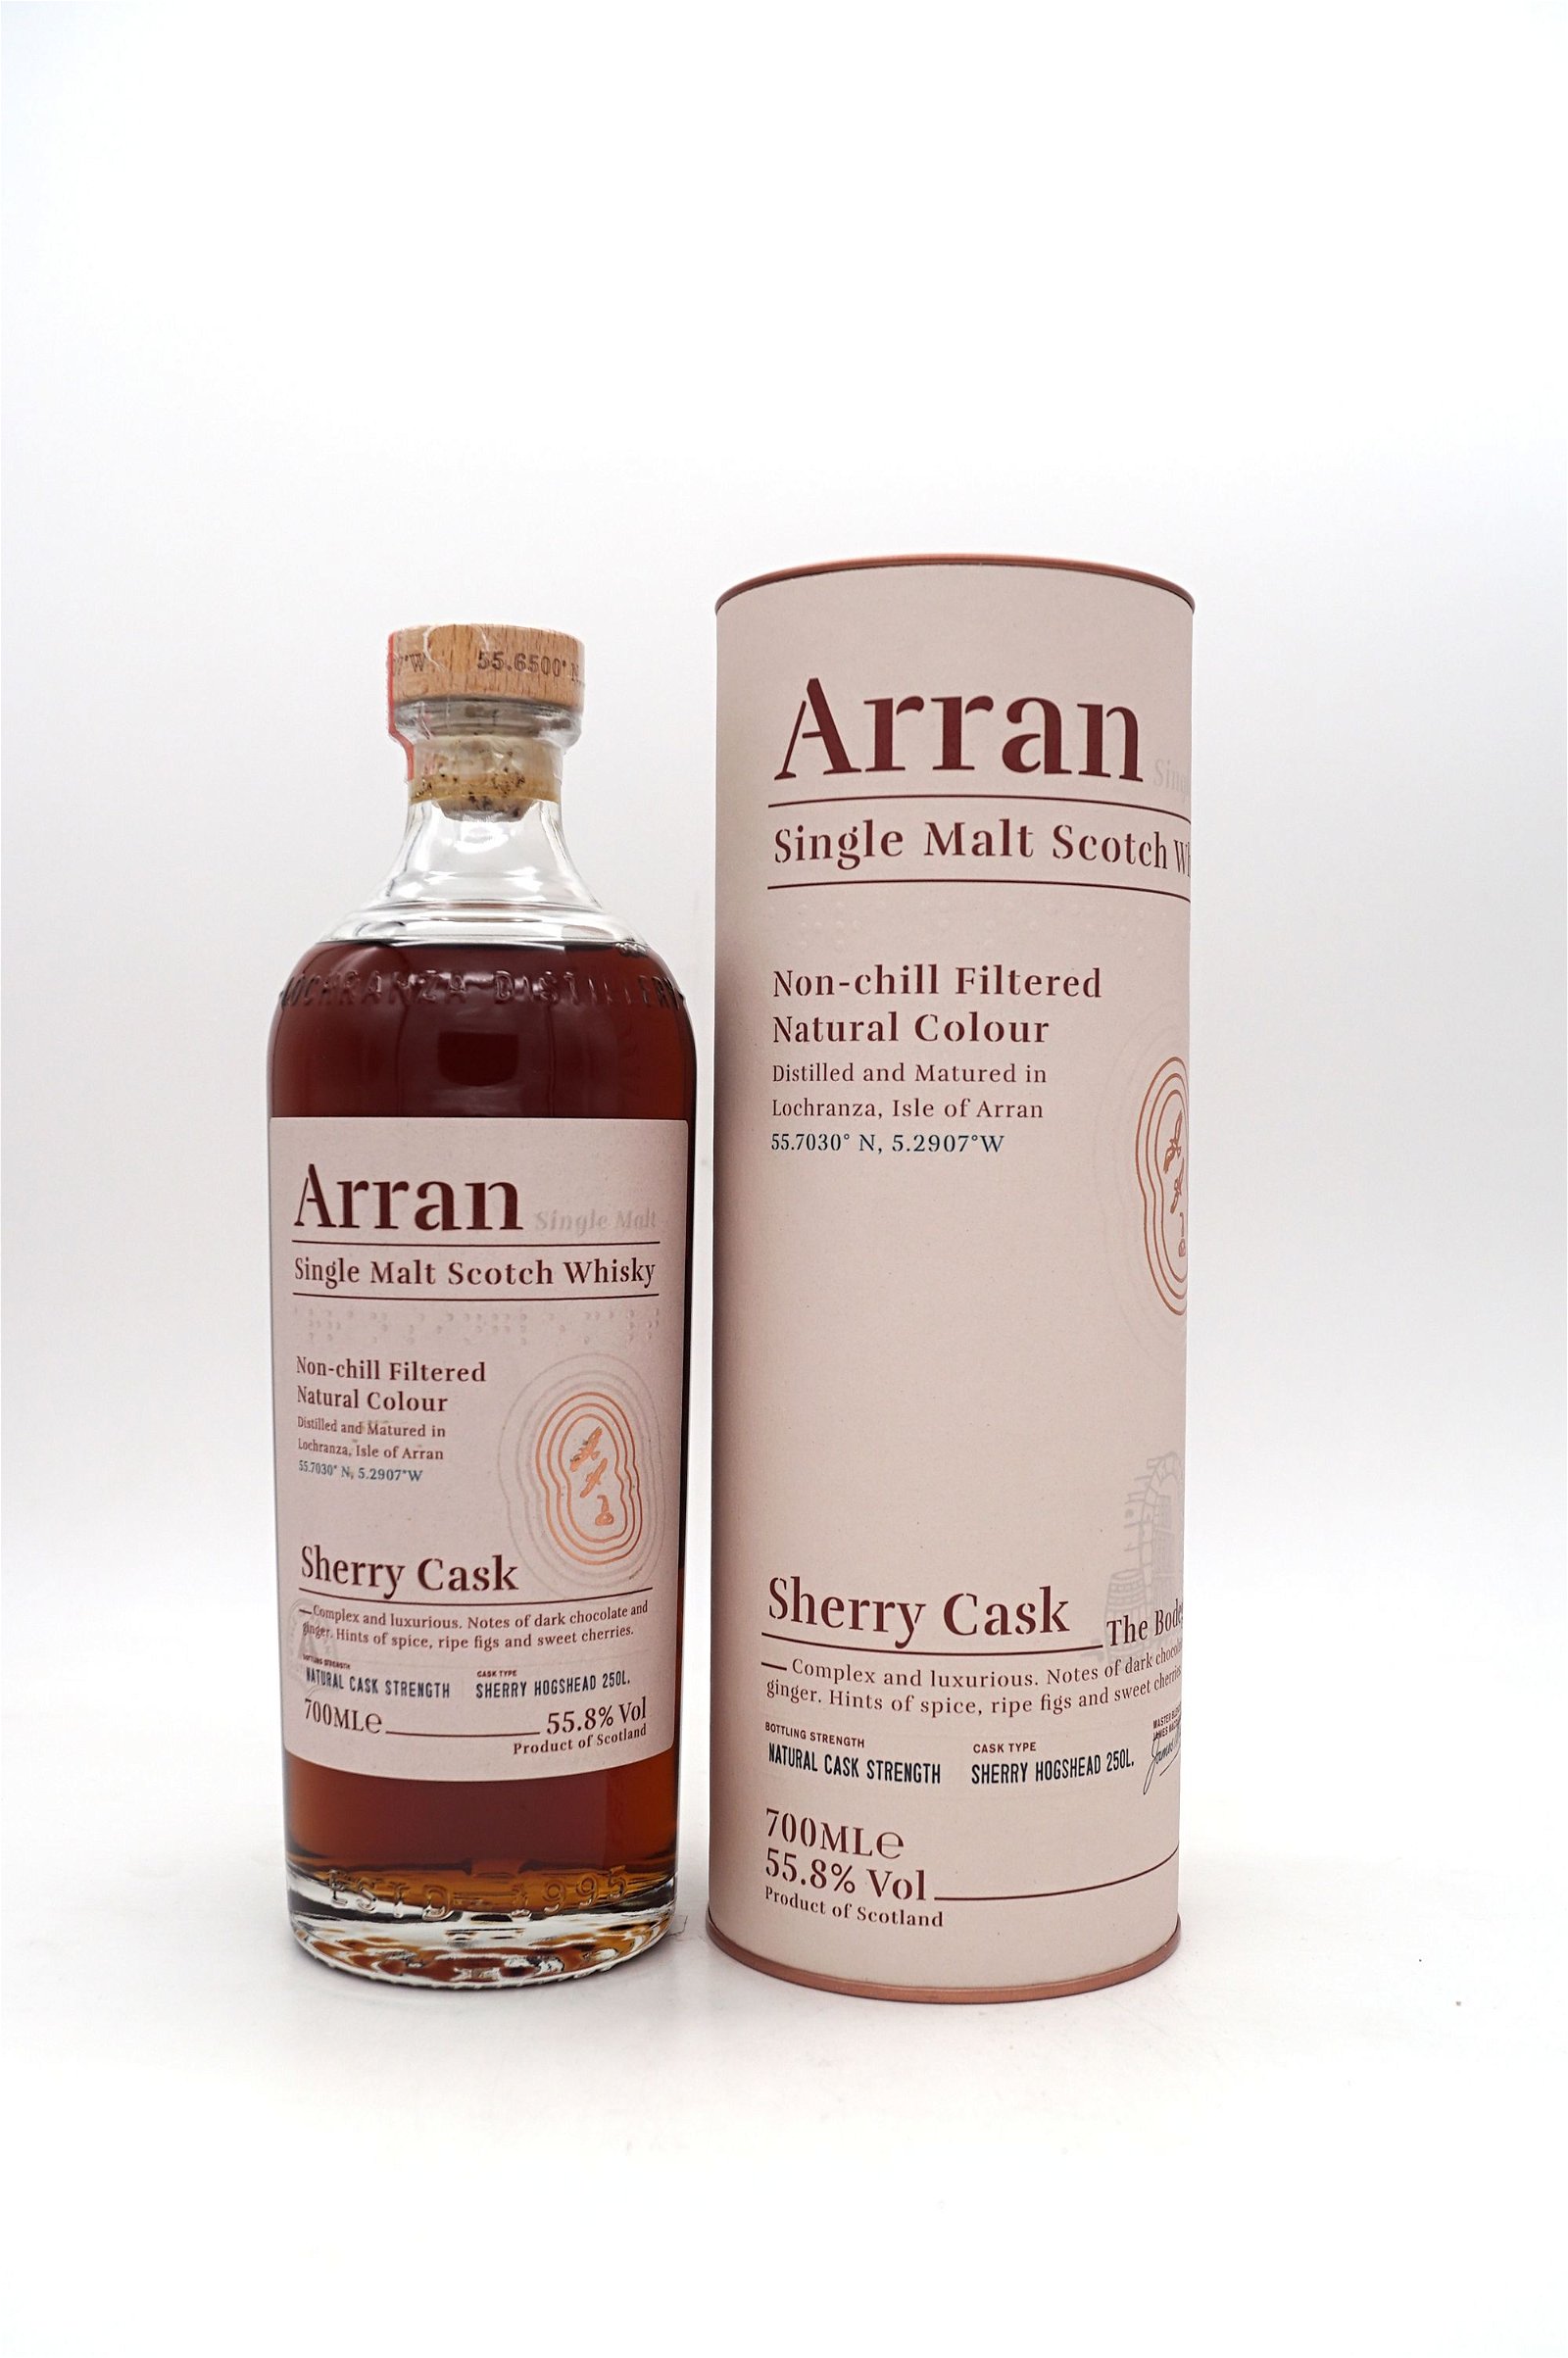 The Arran Sherry Cask The Bodega Single Malt Scotch Whisky